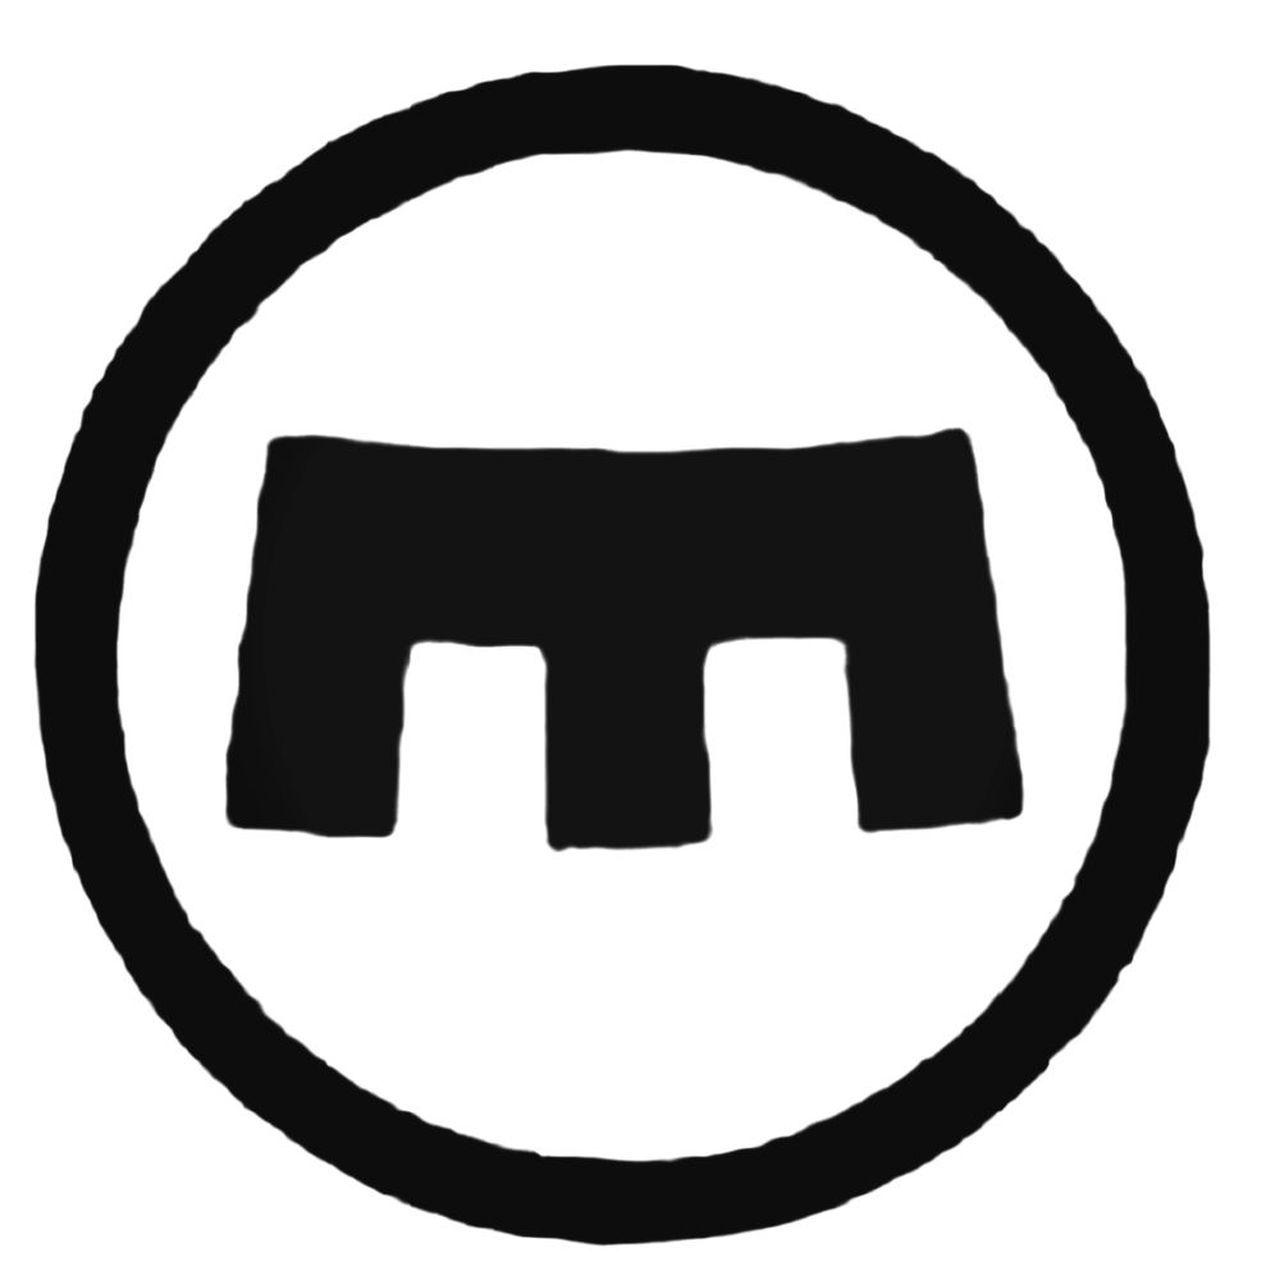 Magura Logo - Magura Round Decal Sticker